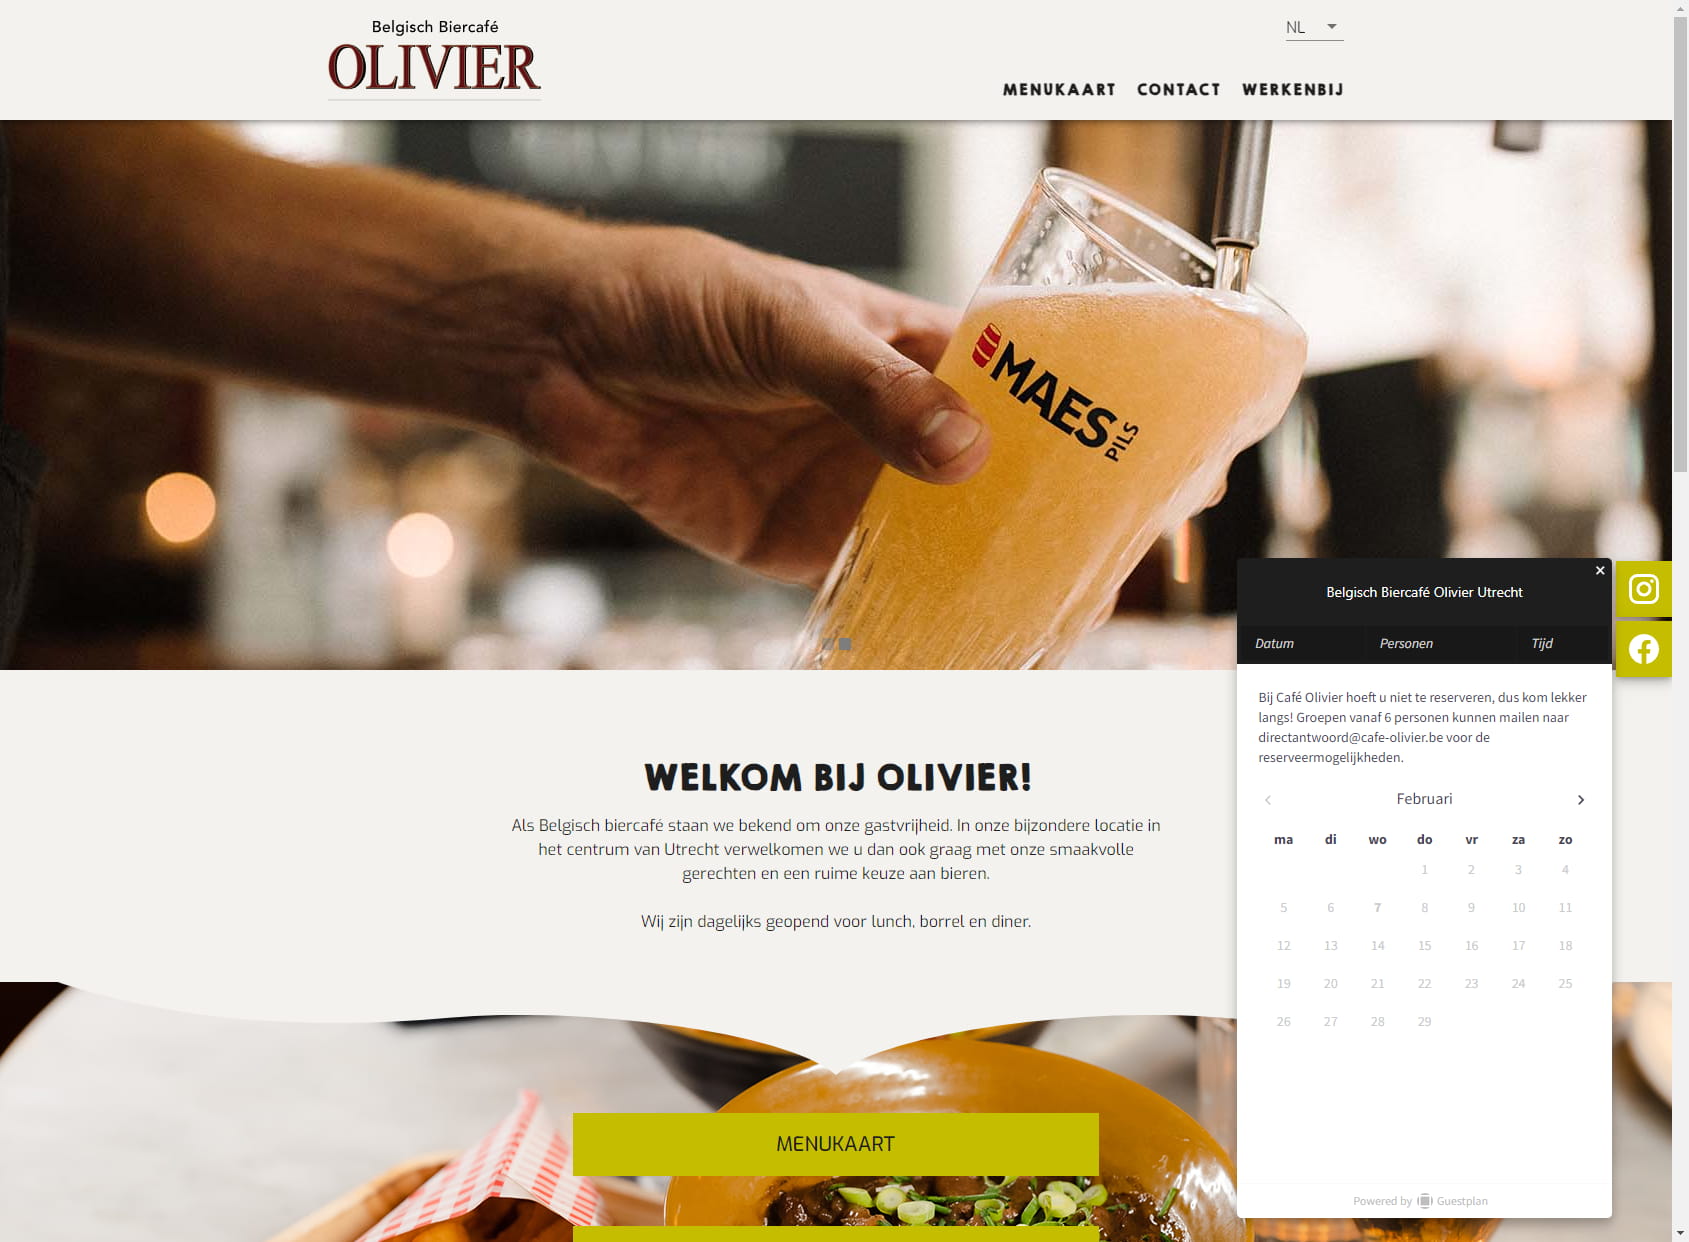 Belgisch Biercafé Olivier Utrecht